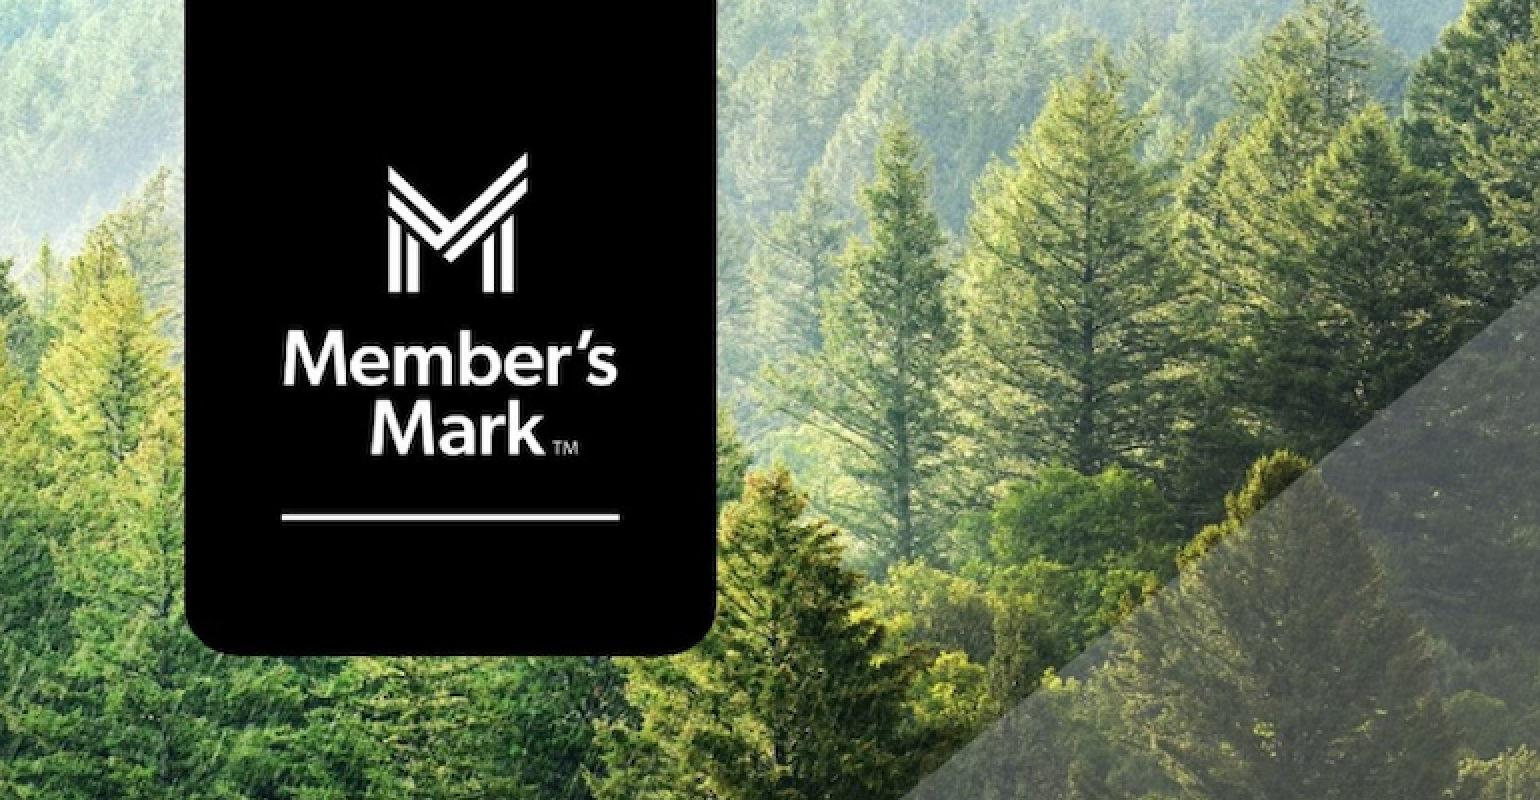 Sam's Club consolidates private brand to “Member's Mark” label